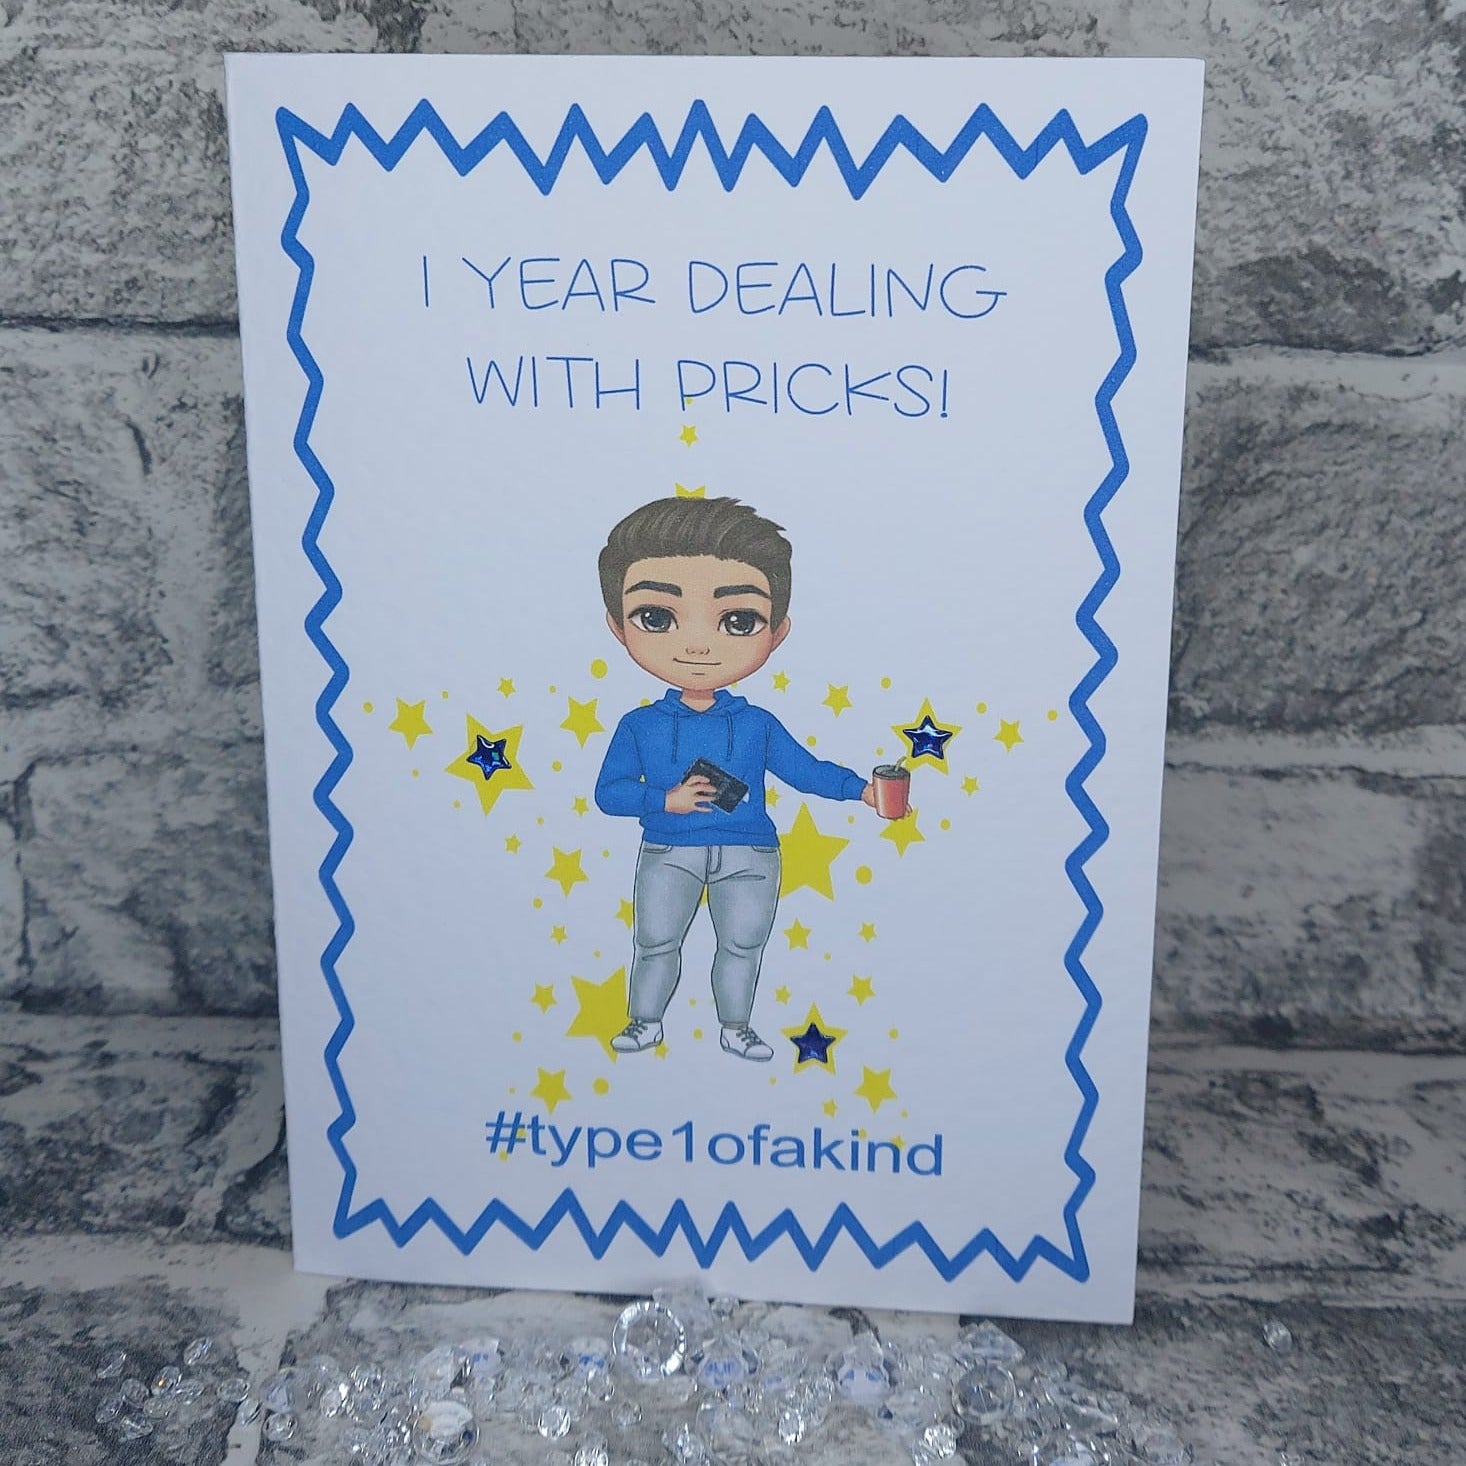 Handmade Customisable Card - 1 Year Dealing With Pricks (Boy)